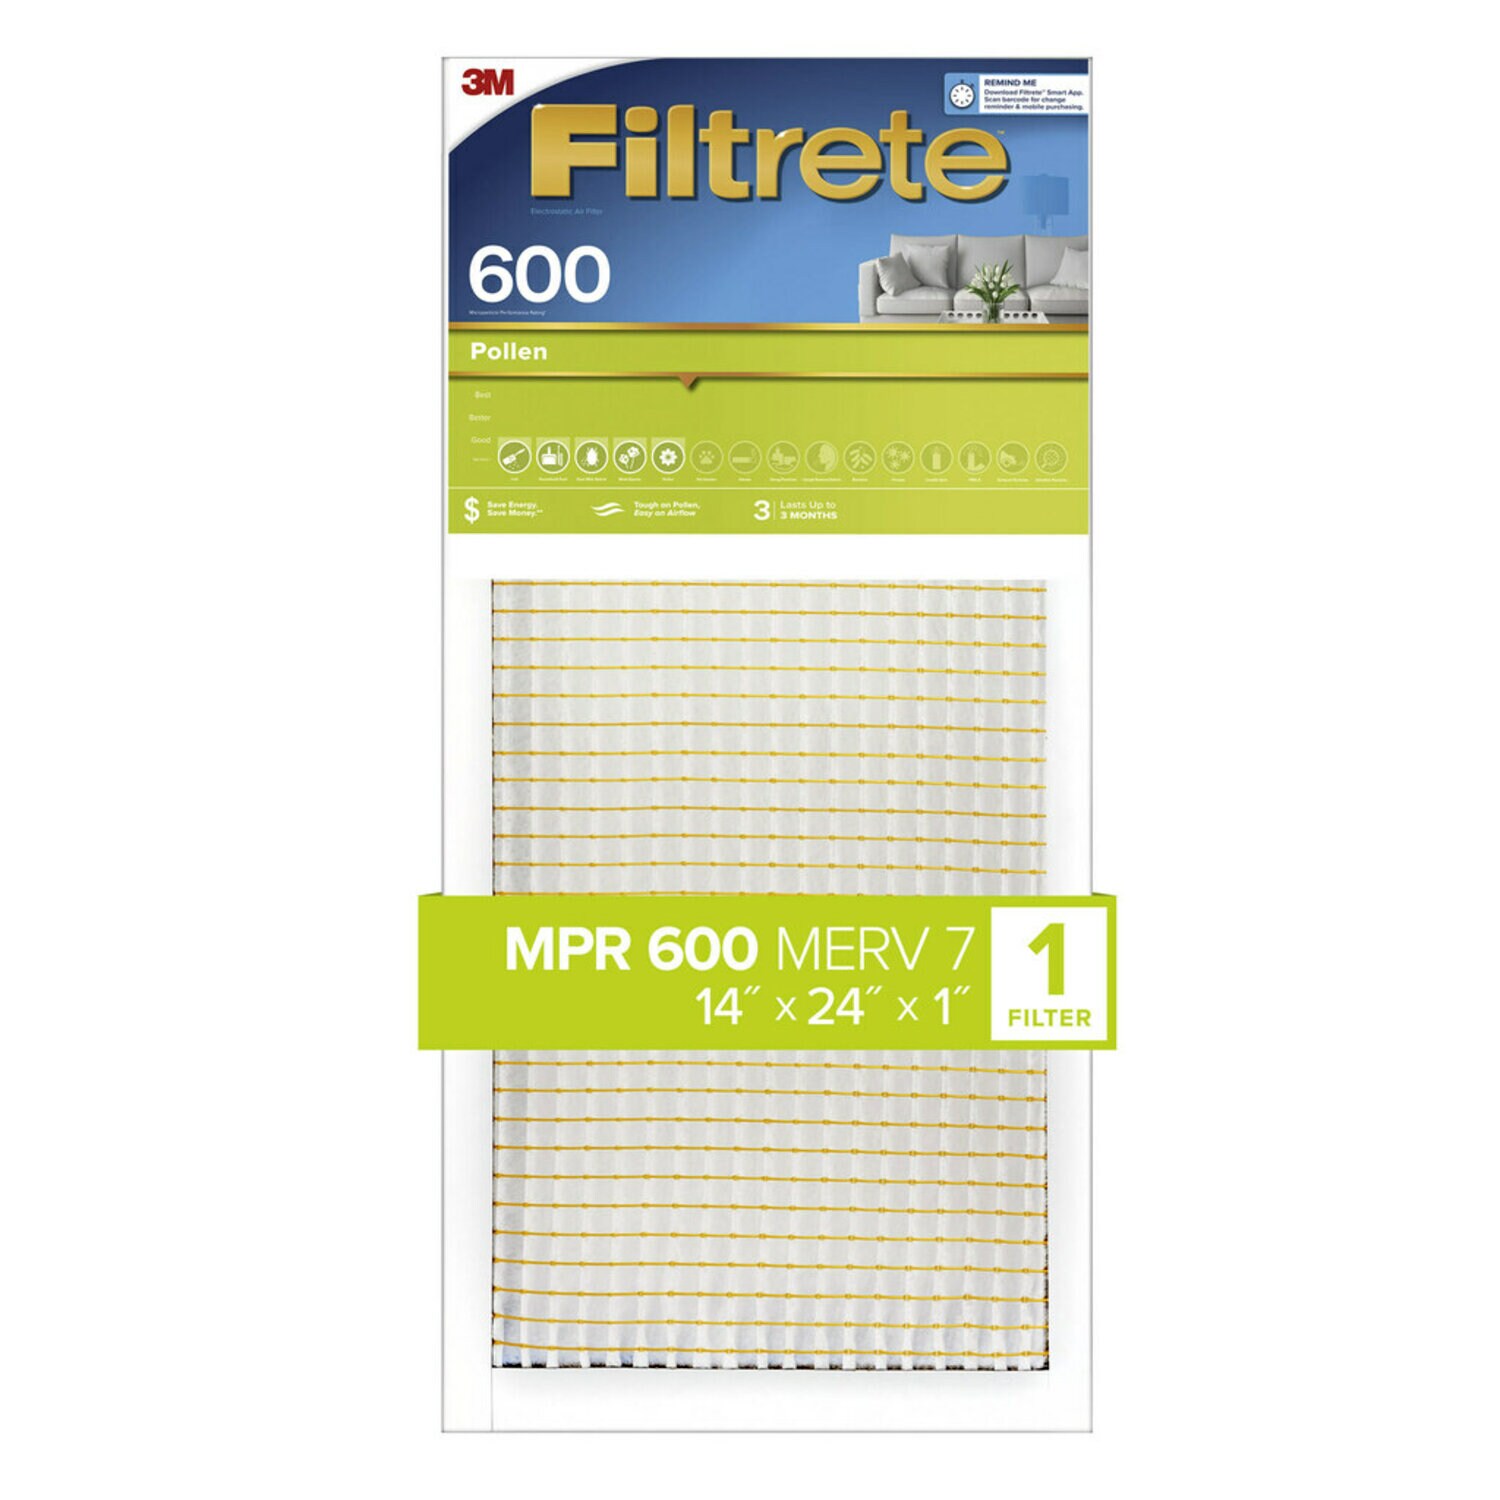 7100264918 - Filtrete Electrostatic Air Filter 600MPR 9863DC-4, 14 in x 24 in x 1 in (35.5 cm x 60.9 cm x 2.5 cm)